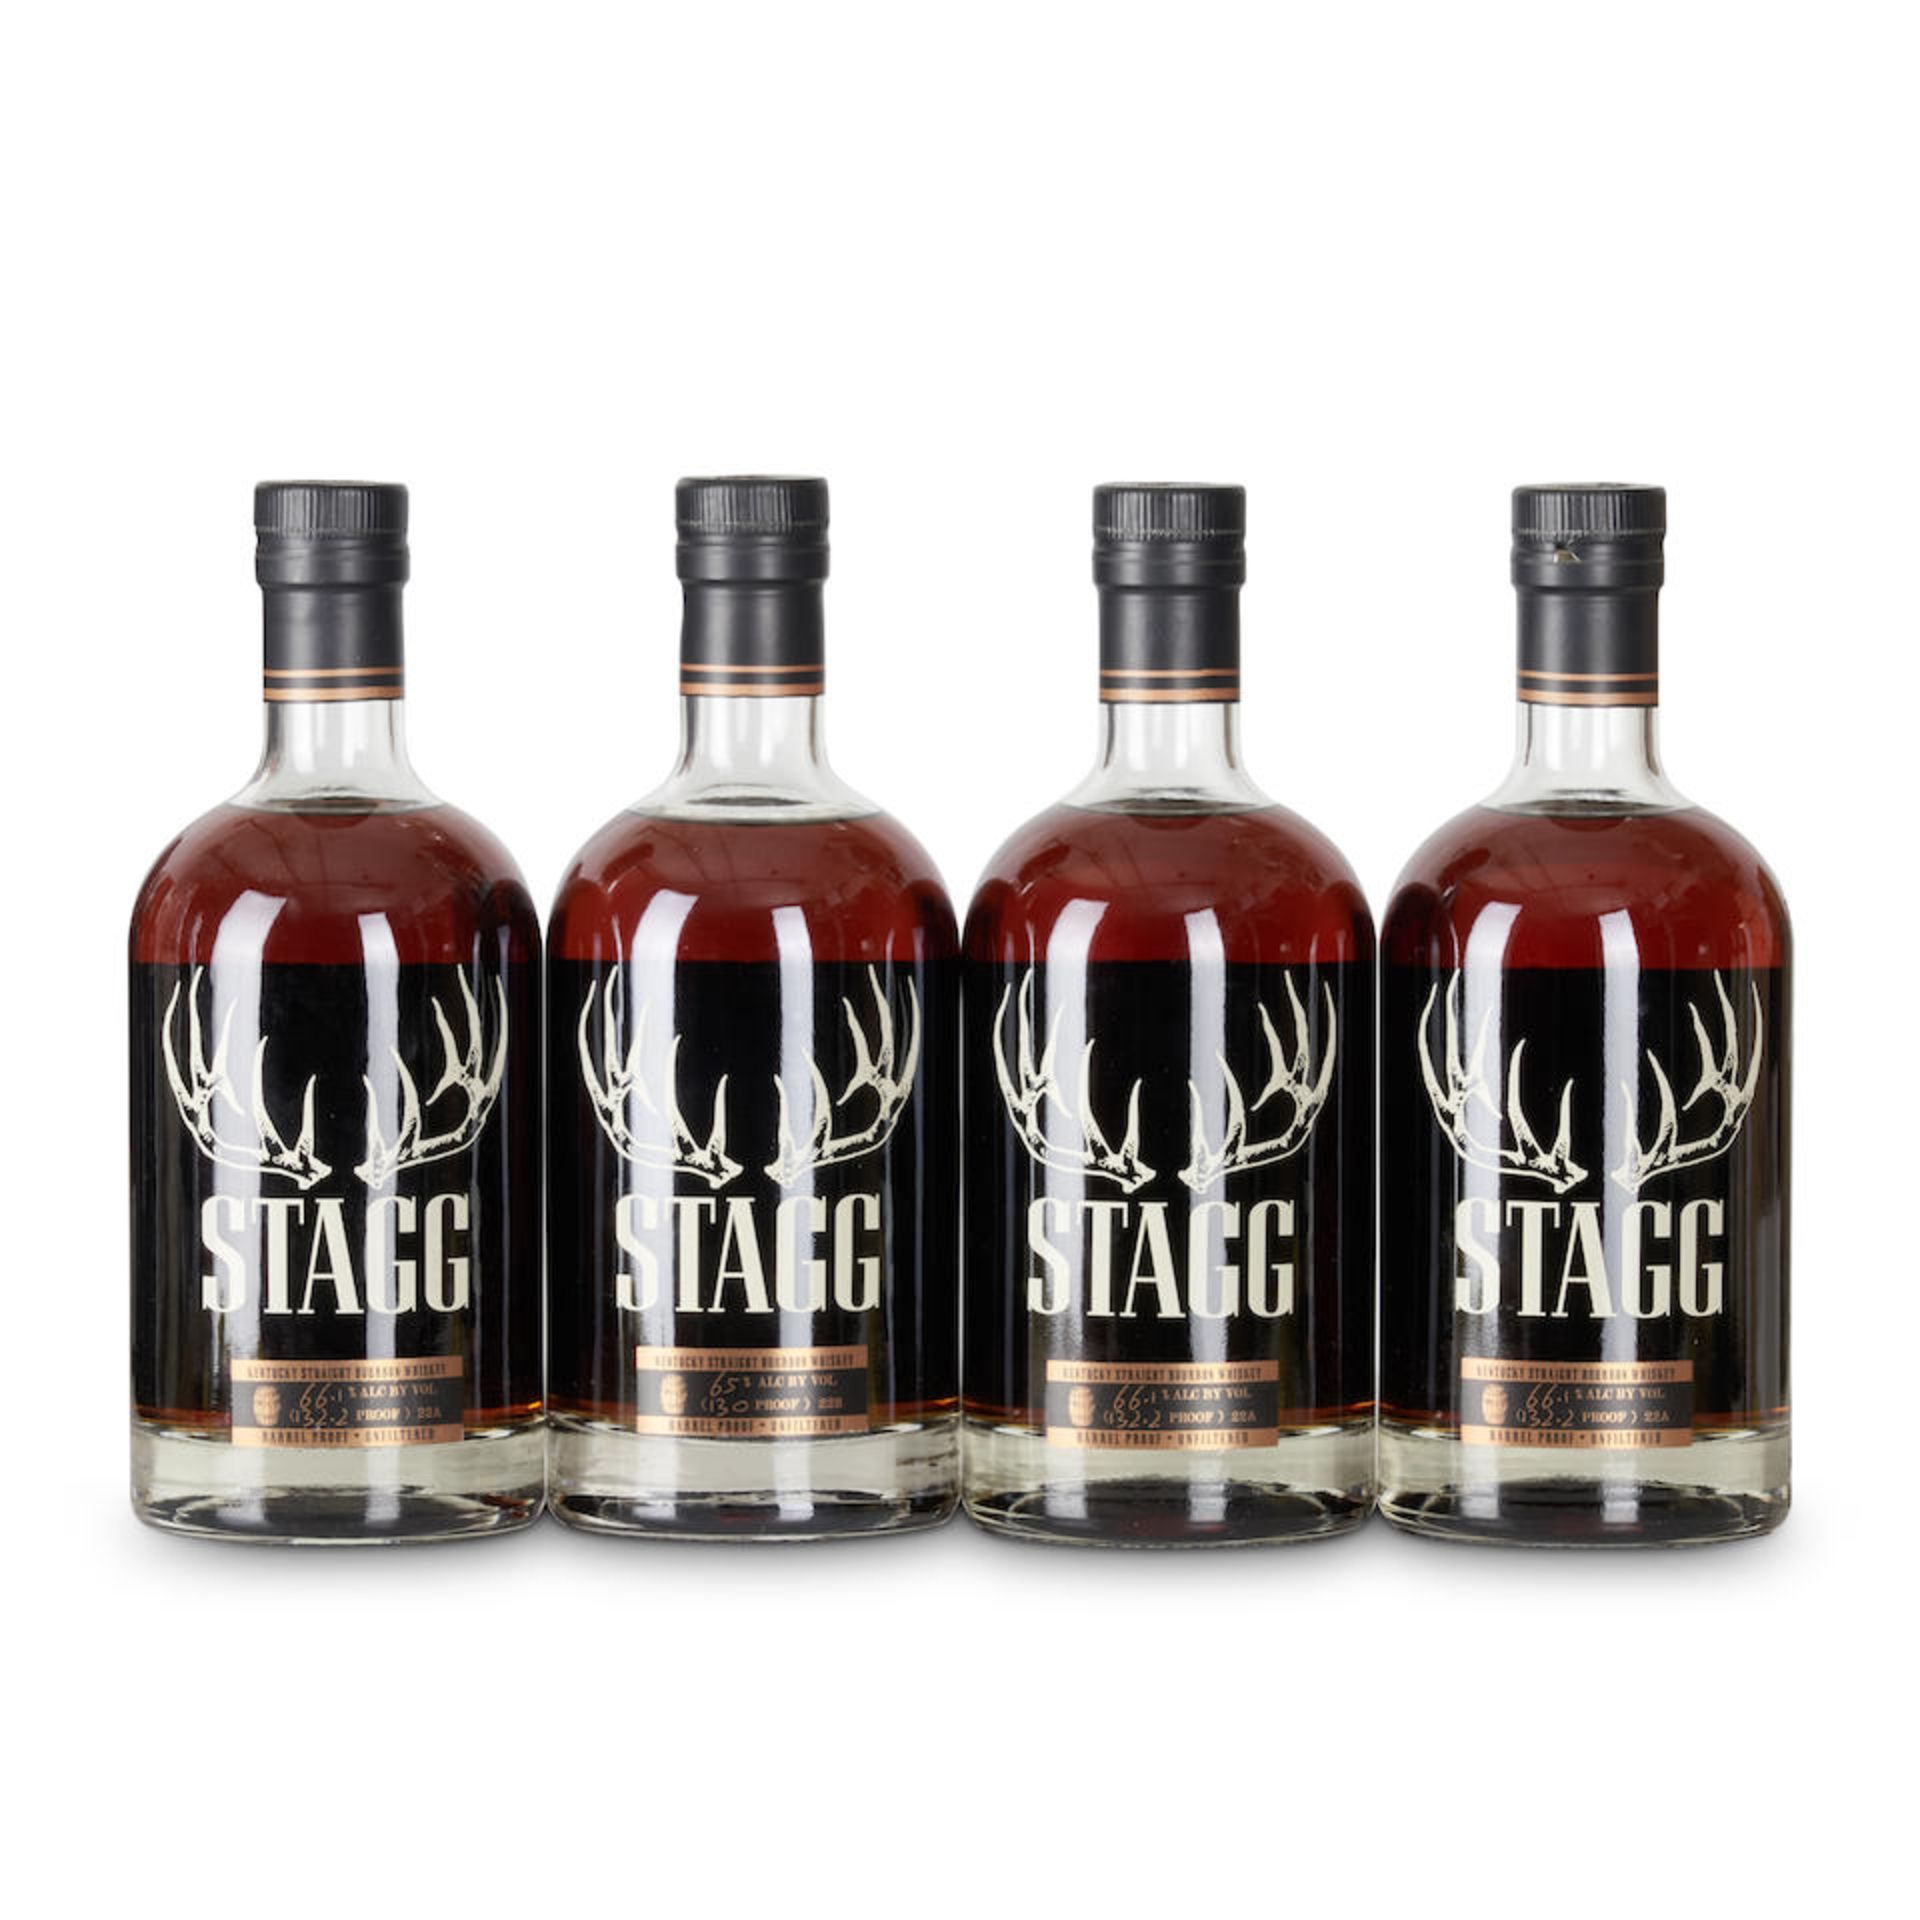 Stagg (4 750ml bottles)